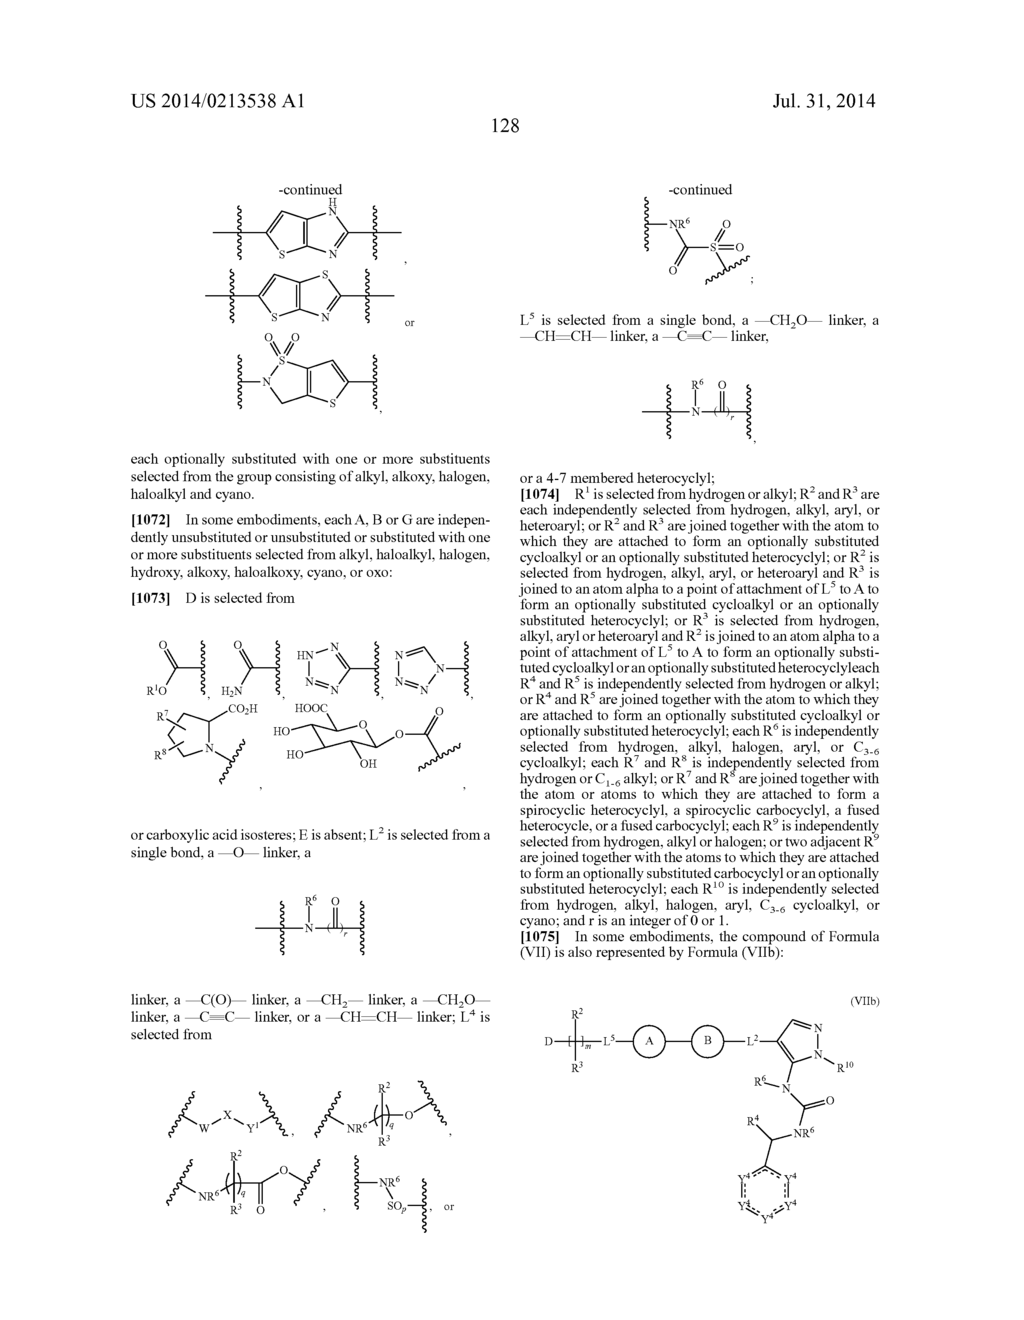 LYSOPHOSPHATIDIC ACID RECEPTOR ANTAGONISTS - diagram, schematic, and image 129